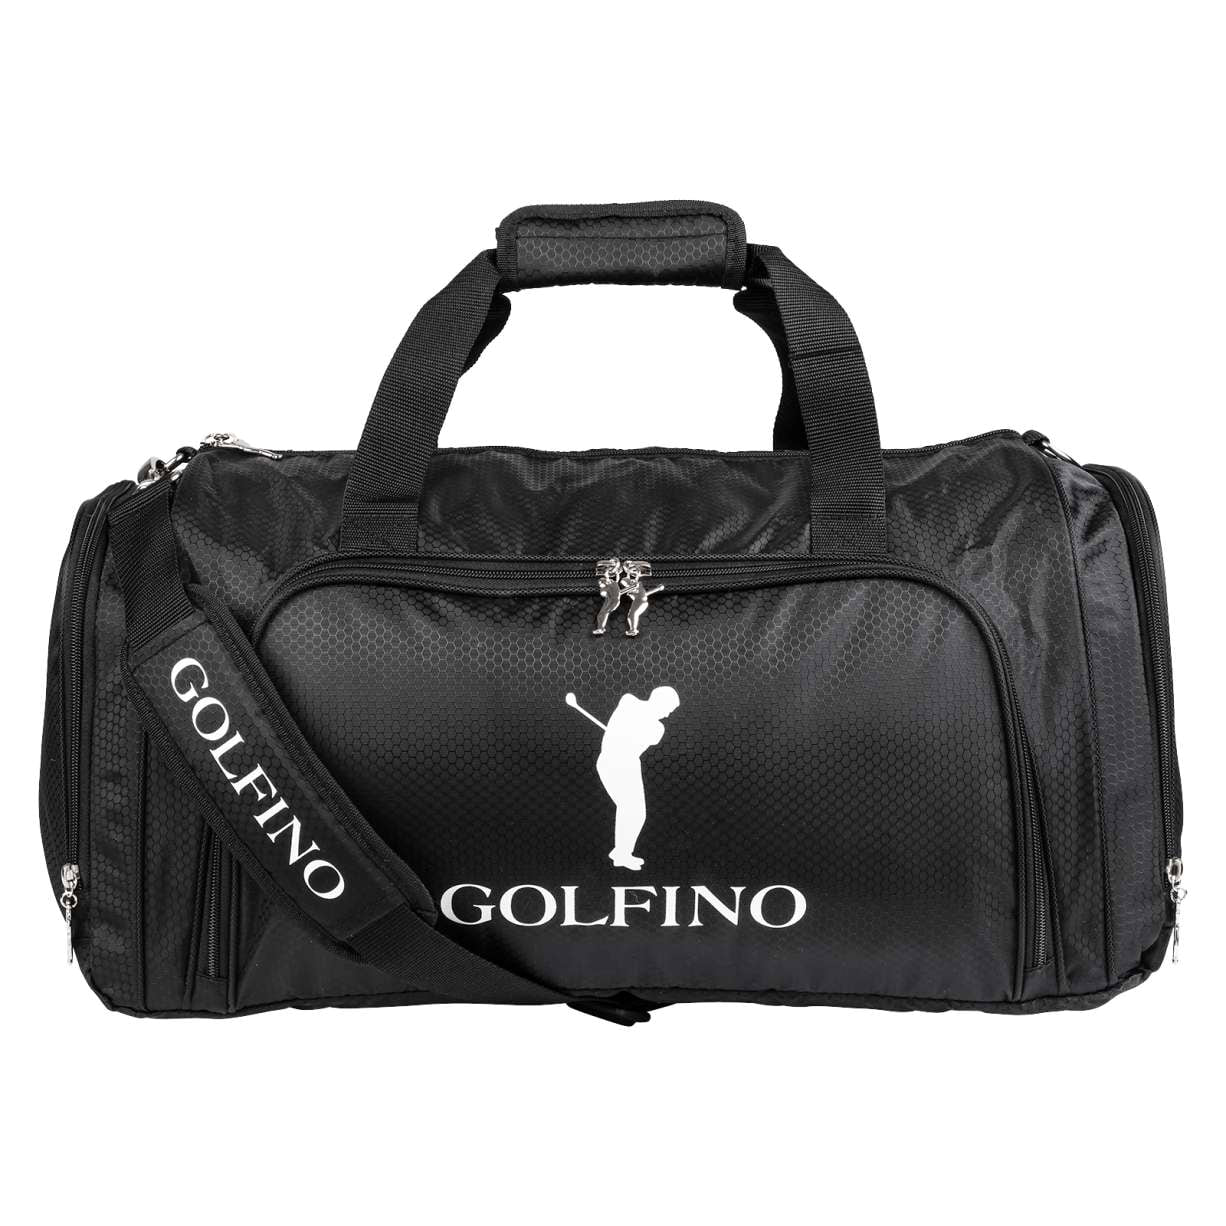 Is Golfino a Good Brand?